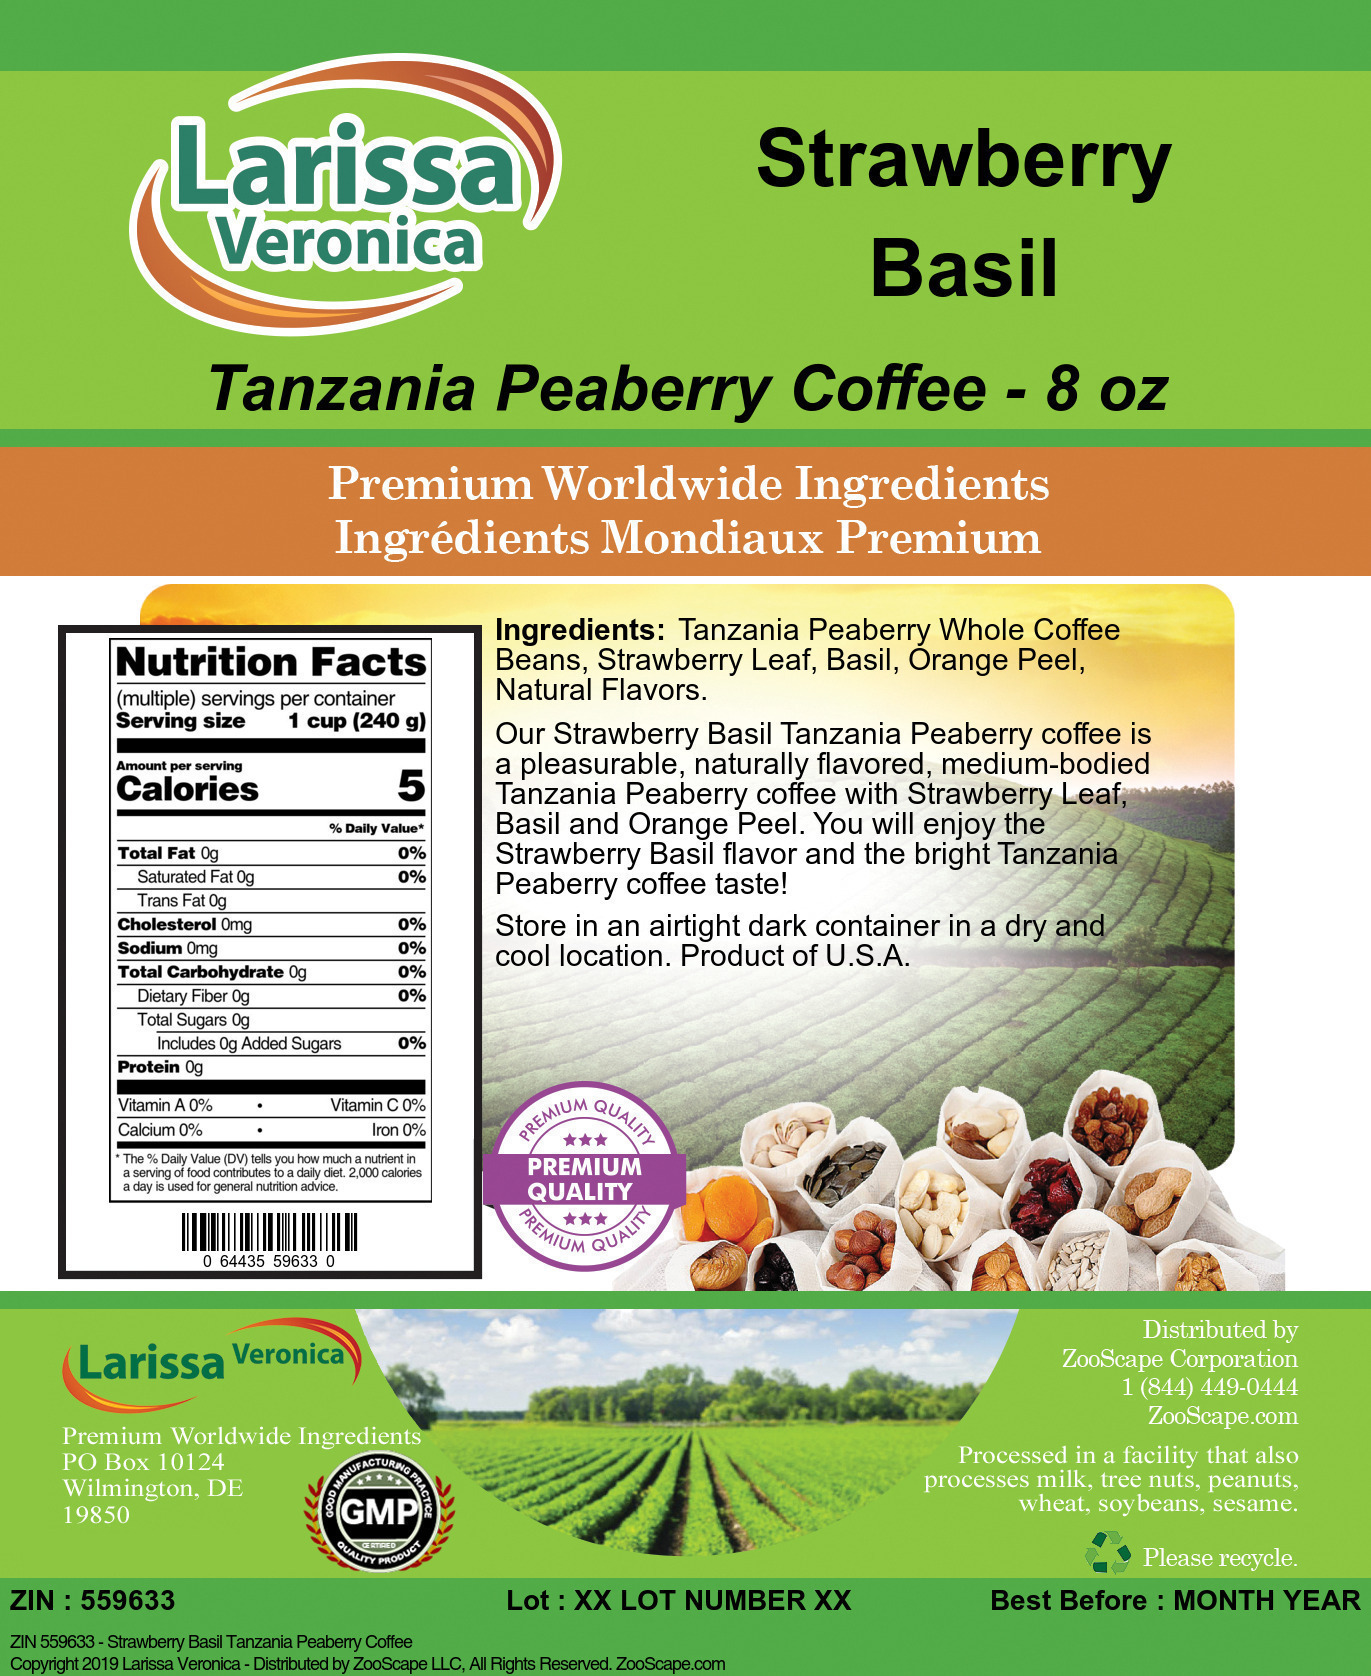 Strawberry Basil Tanzania Peaberry Coffee - Label